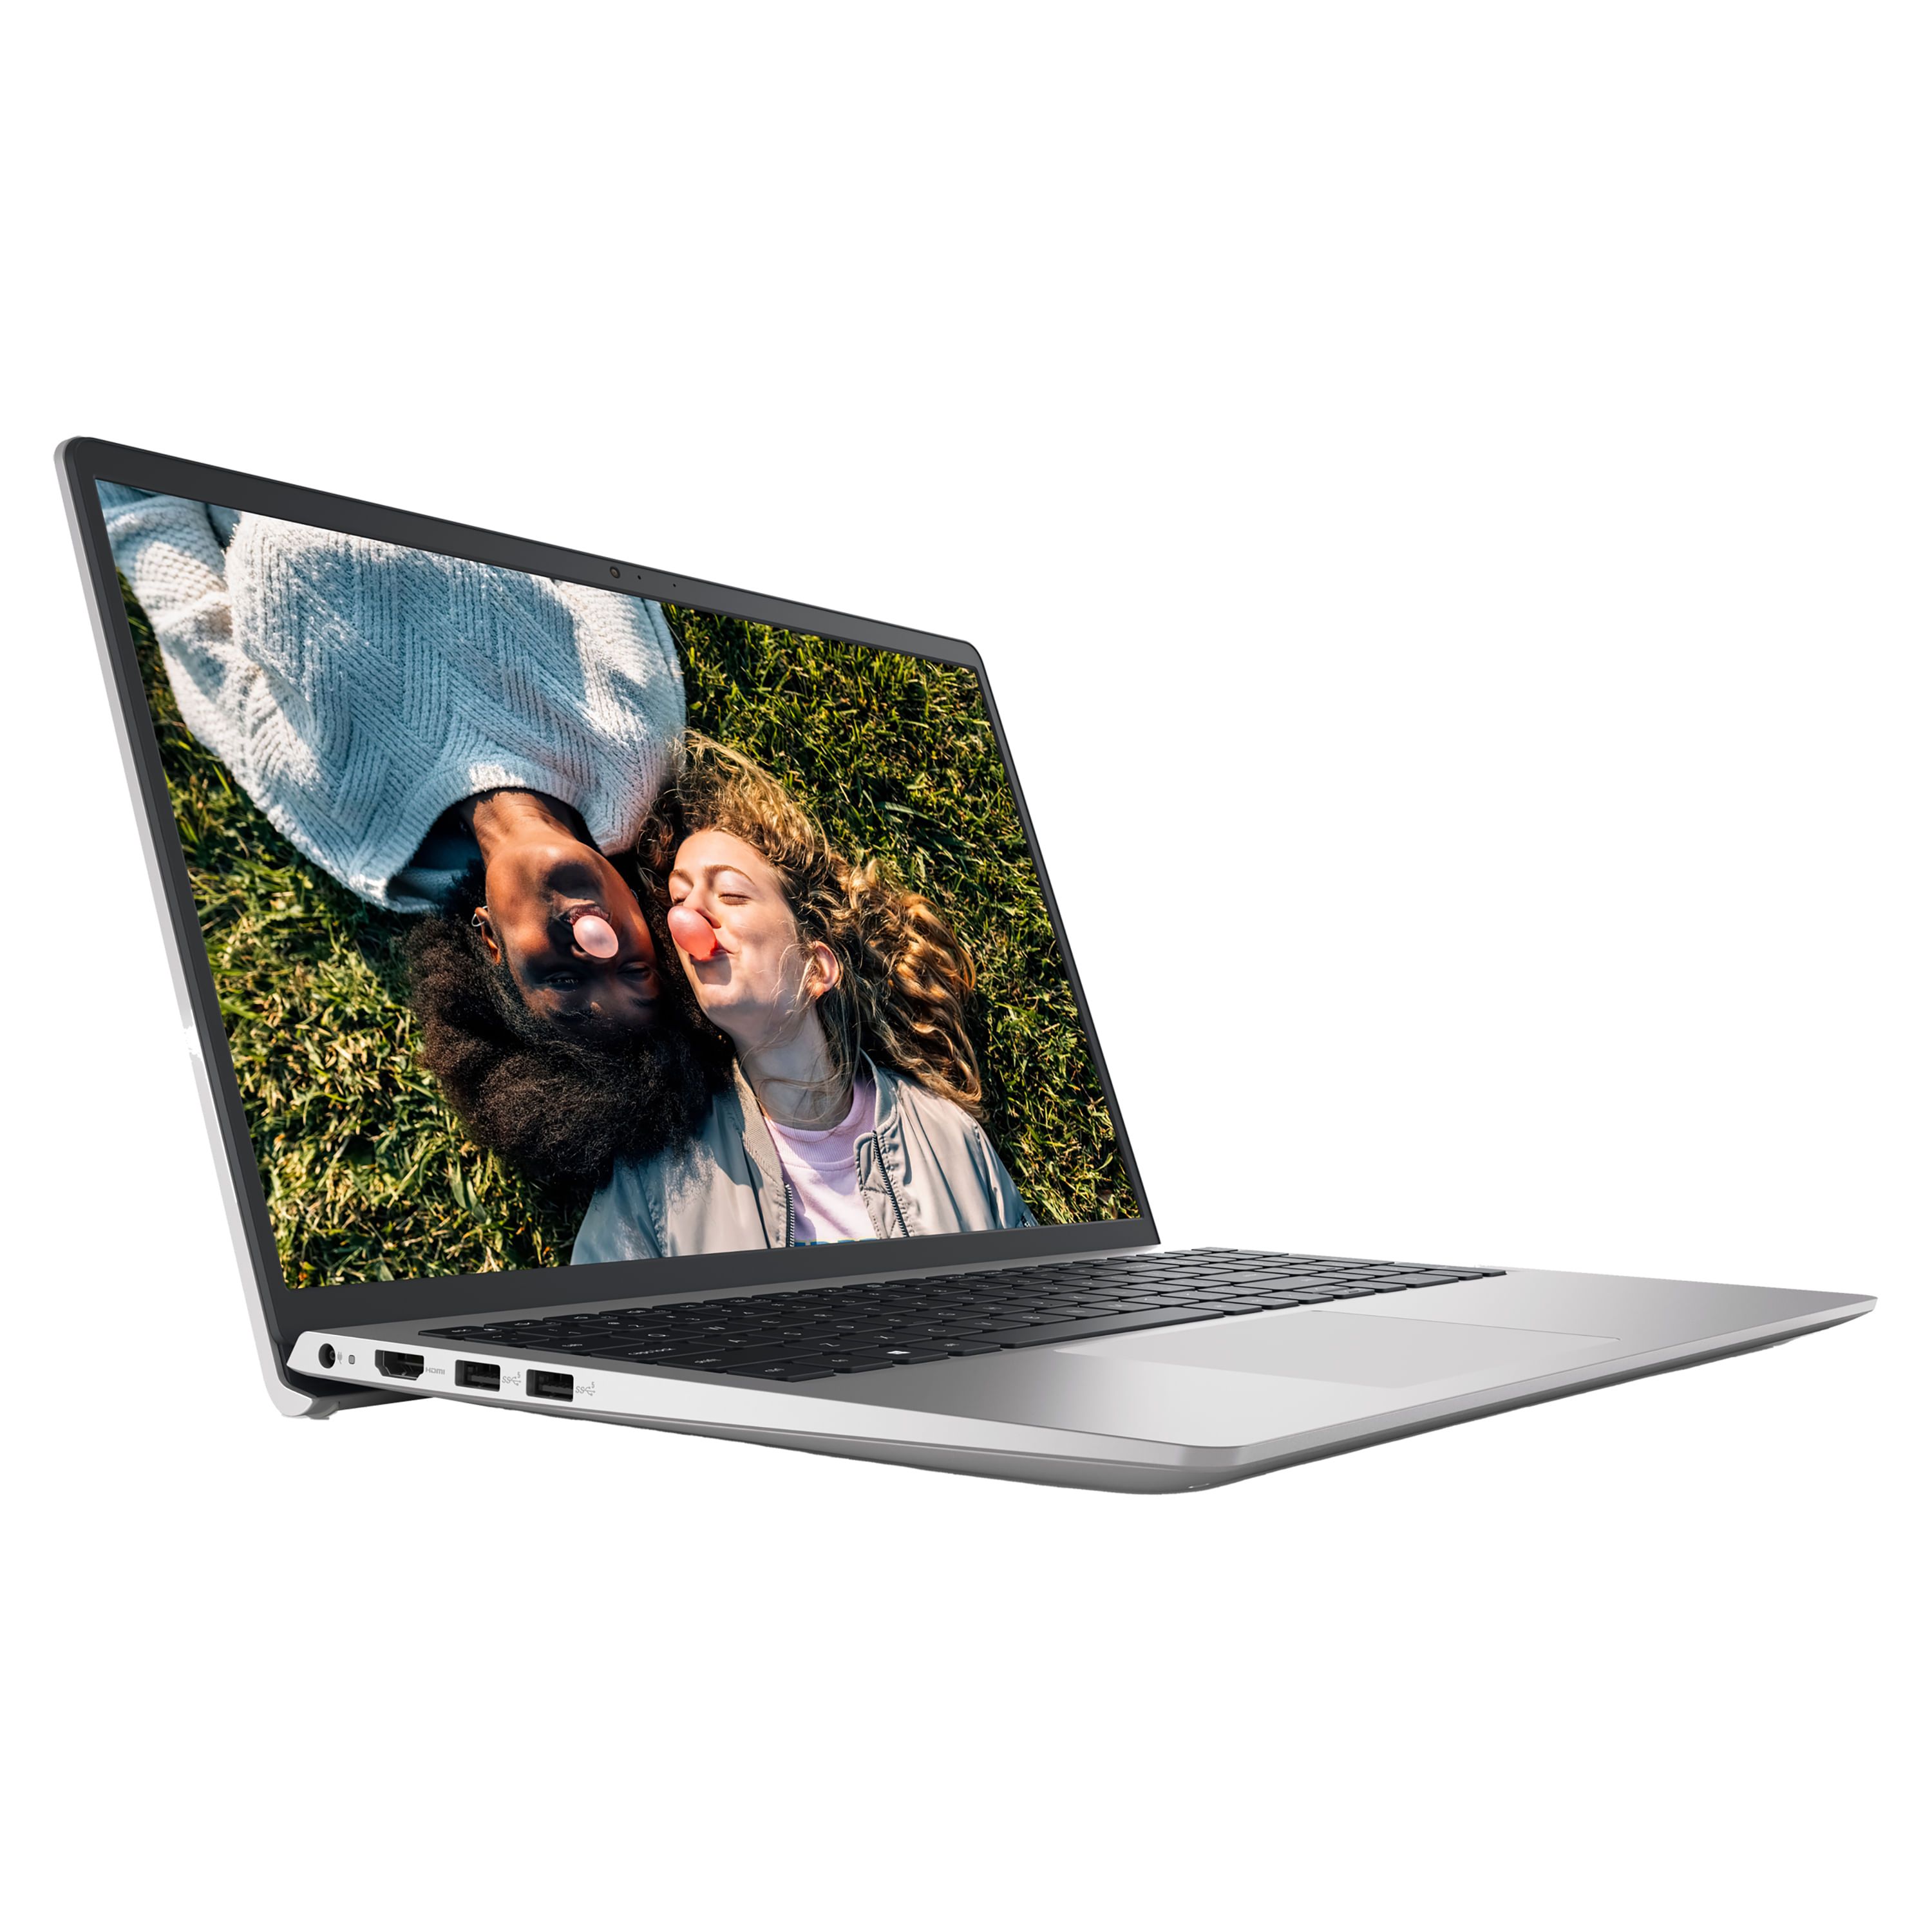 Comprar Laptop Dell Inspiron 15 3511 - Intel Core Home Single Language + Office 365 modelo KT151XGT36/ 5XG5C | Walmart Guatemala